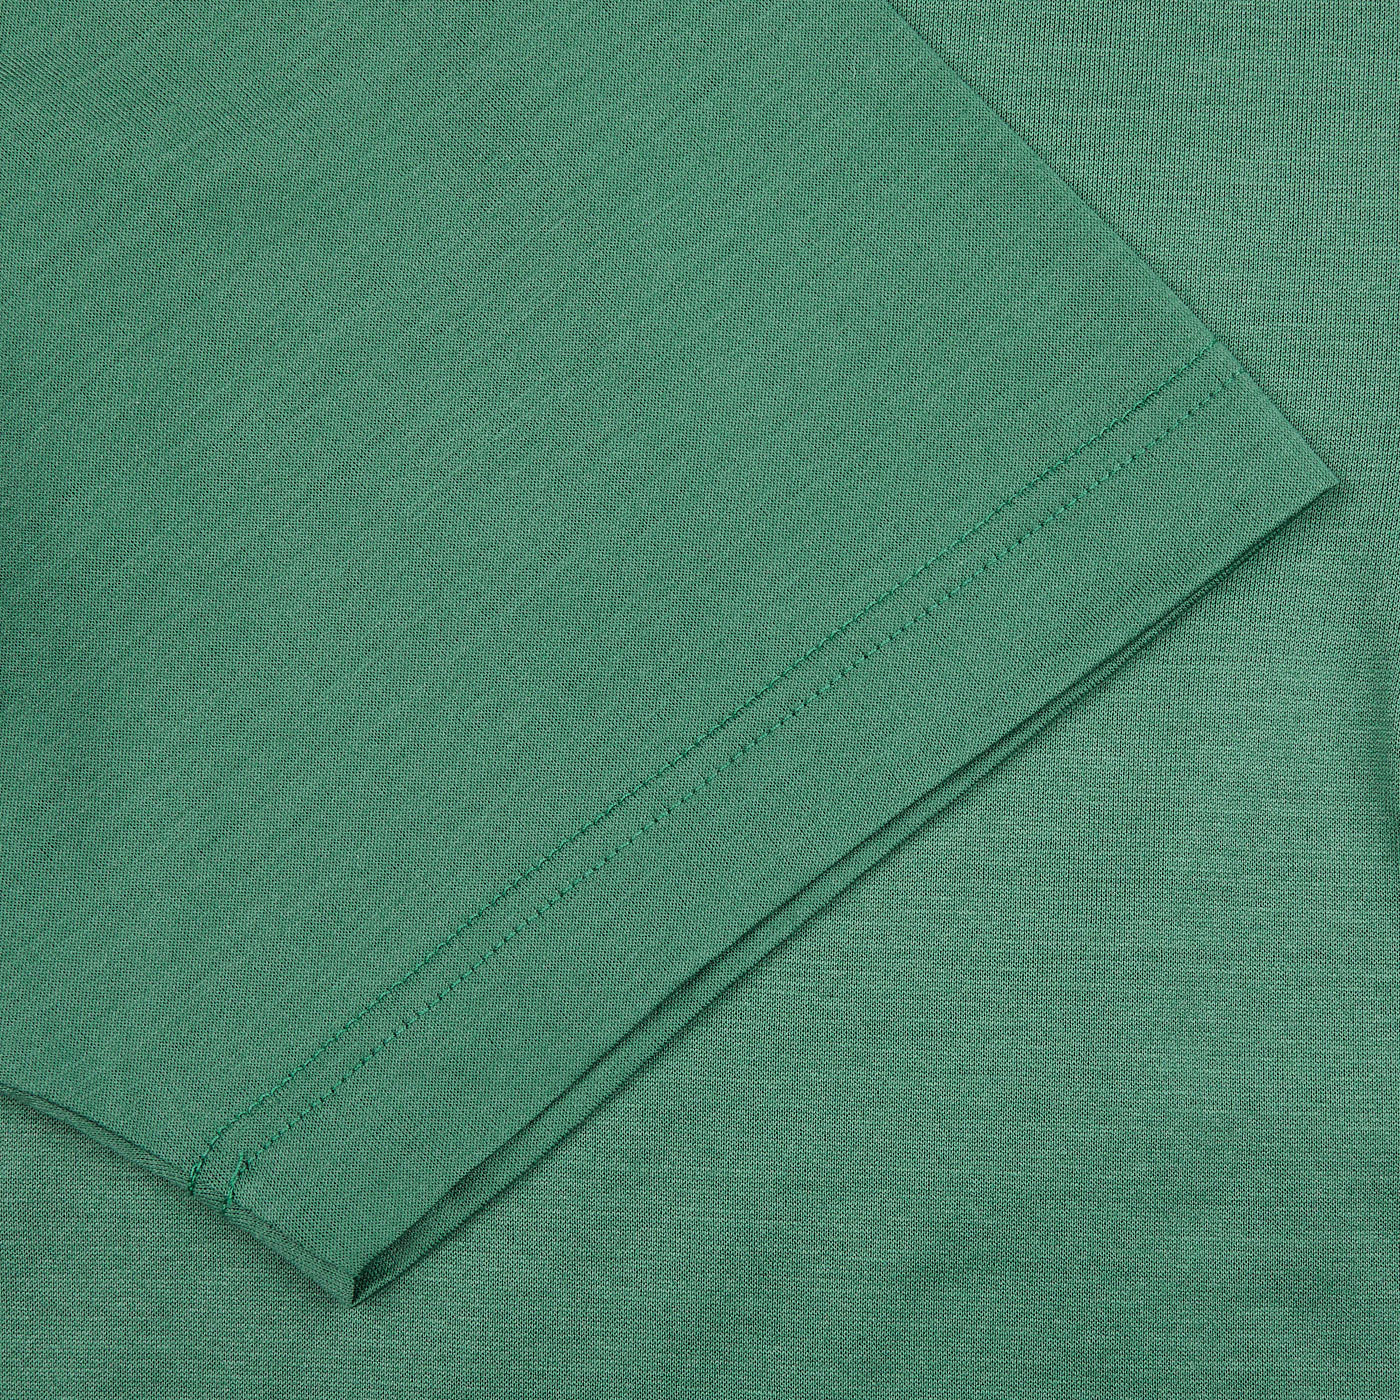 A close up of a Gran Sasso Aqua Green Cotton Filo Scozia Polo Shirt made of knitted fabric.